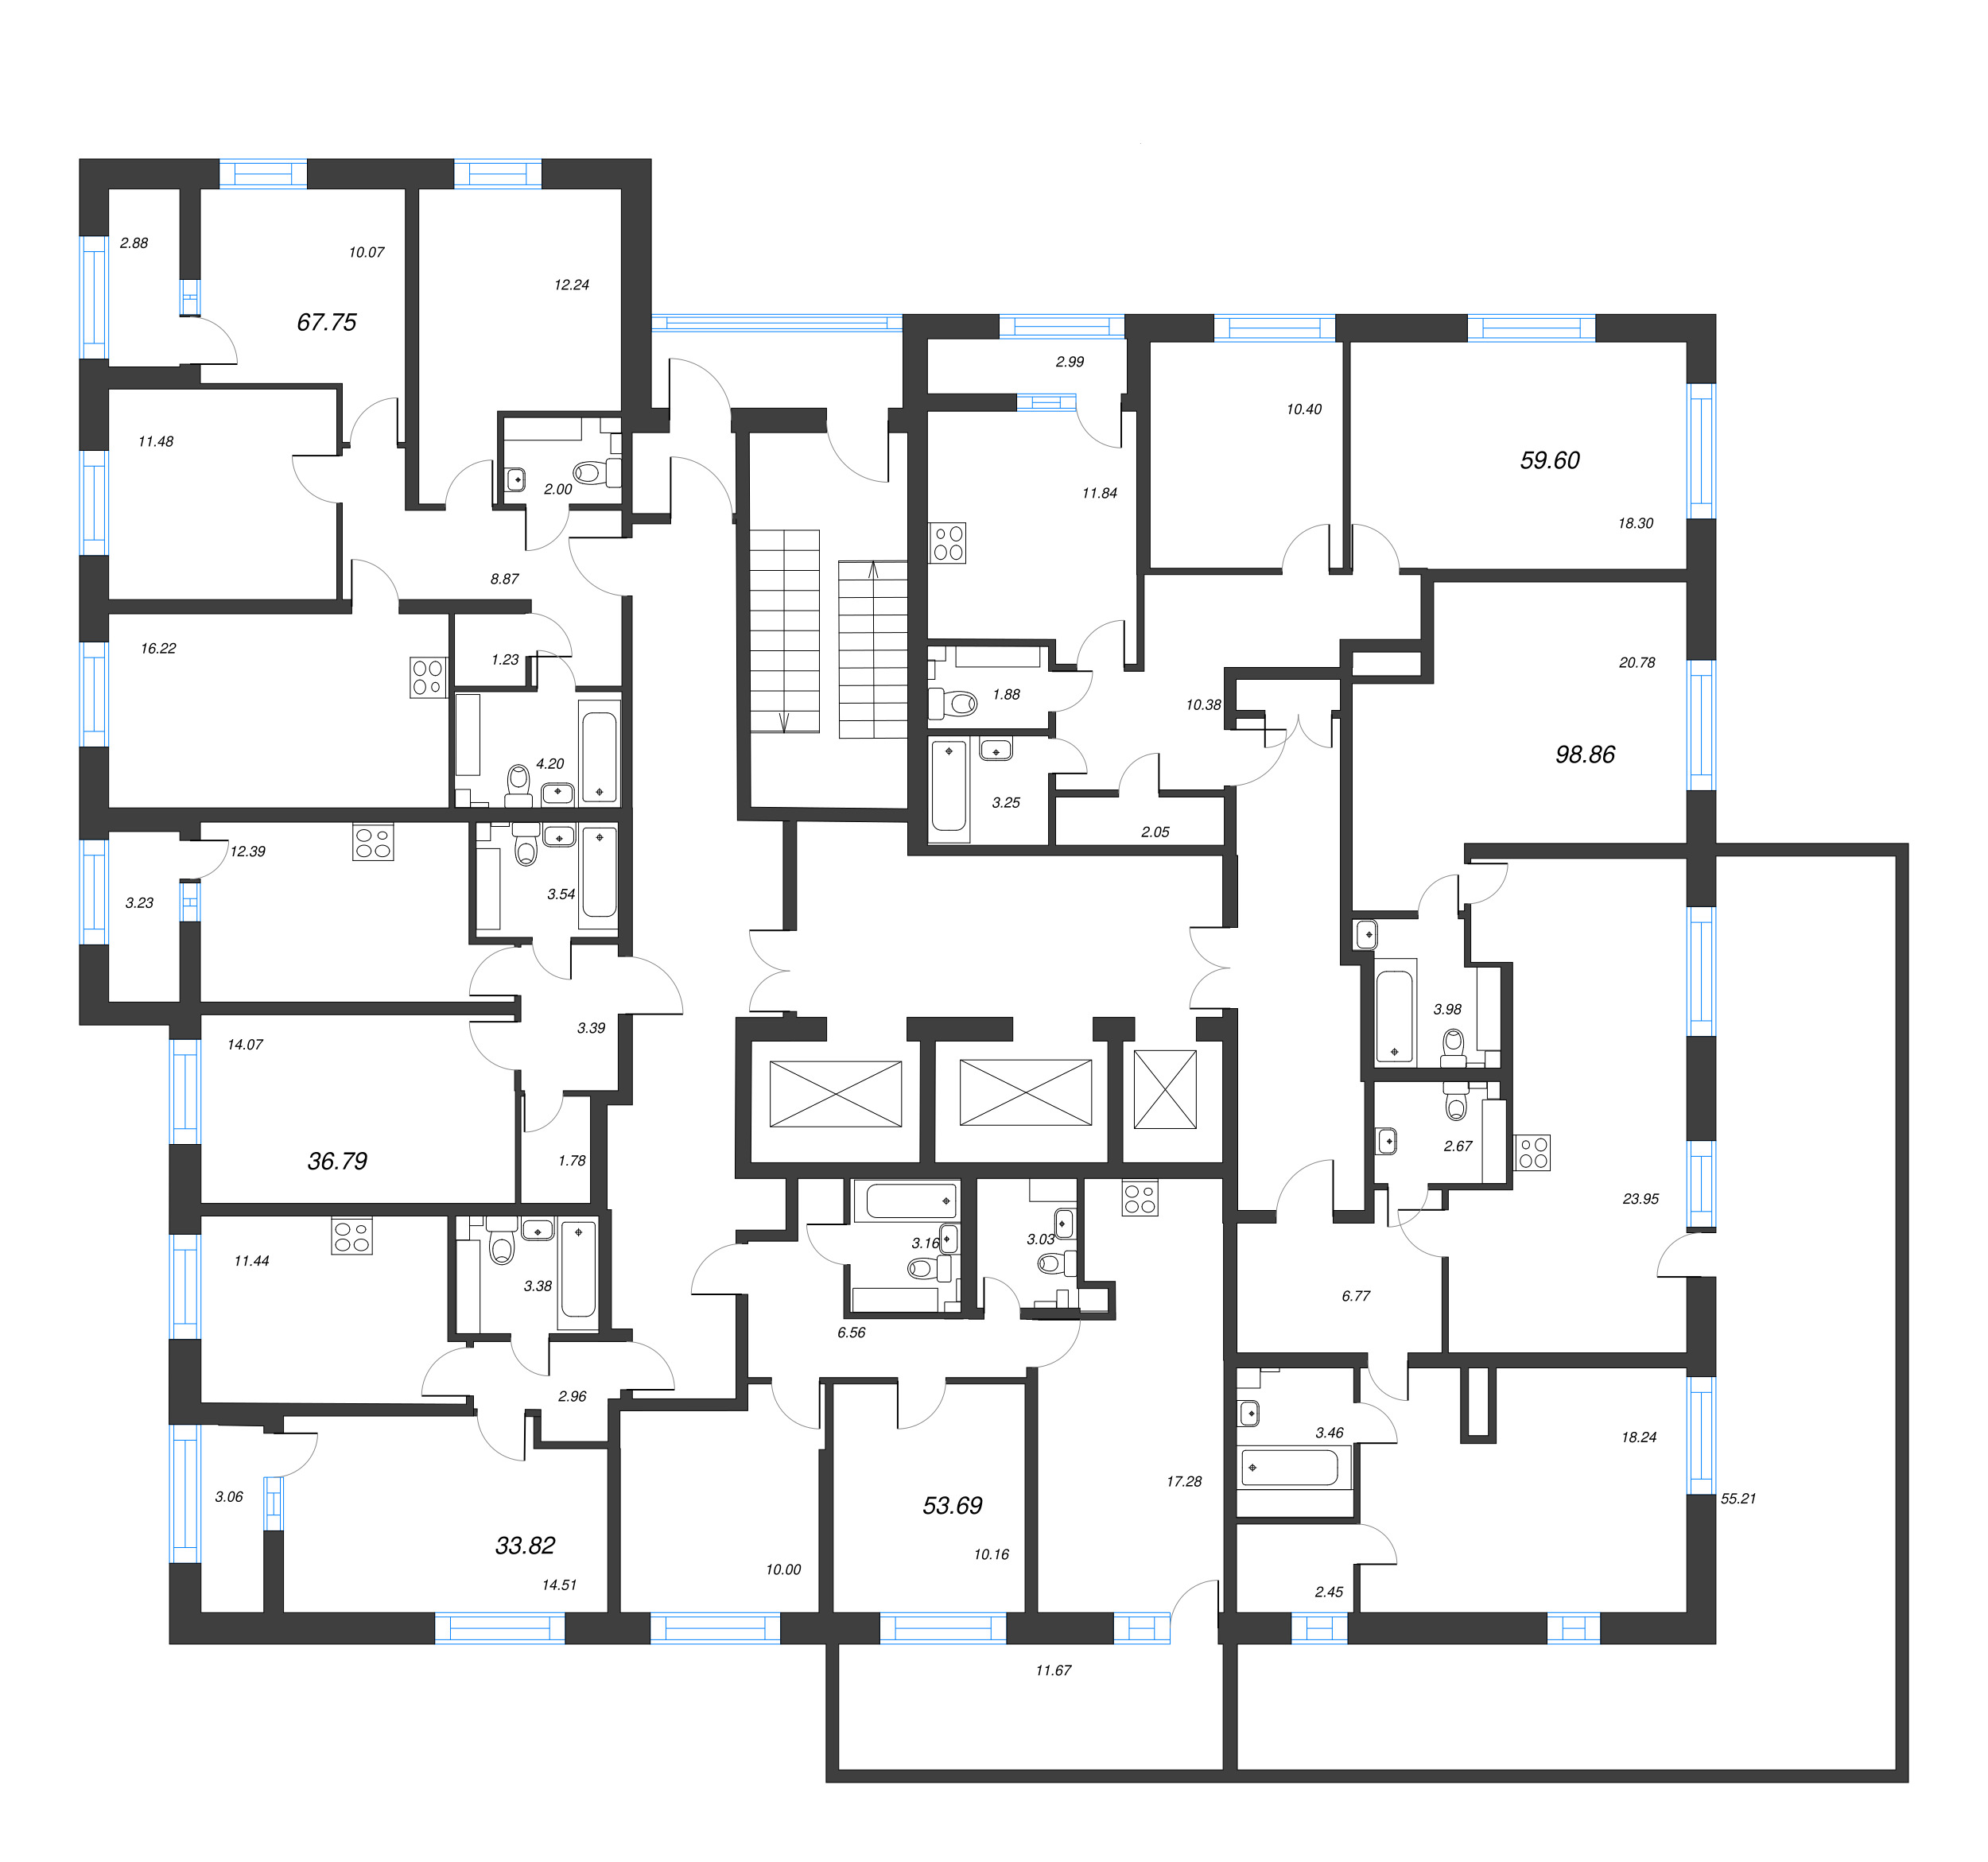 3-комнатная (Евро) квартира, 98.86 м² в ЖК "БелАрт" - планировка этажа